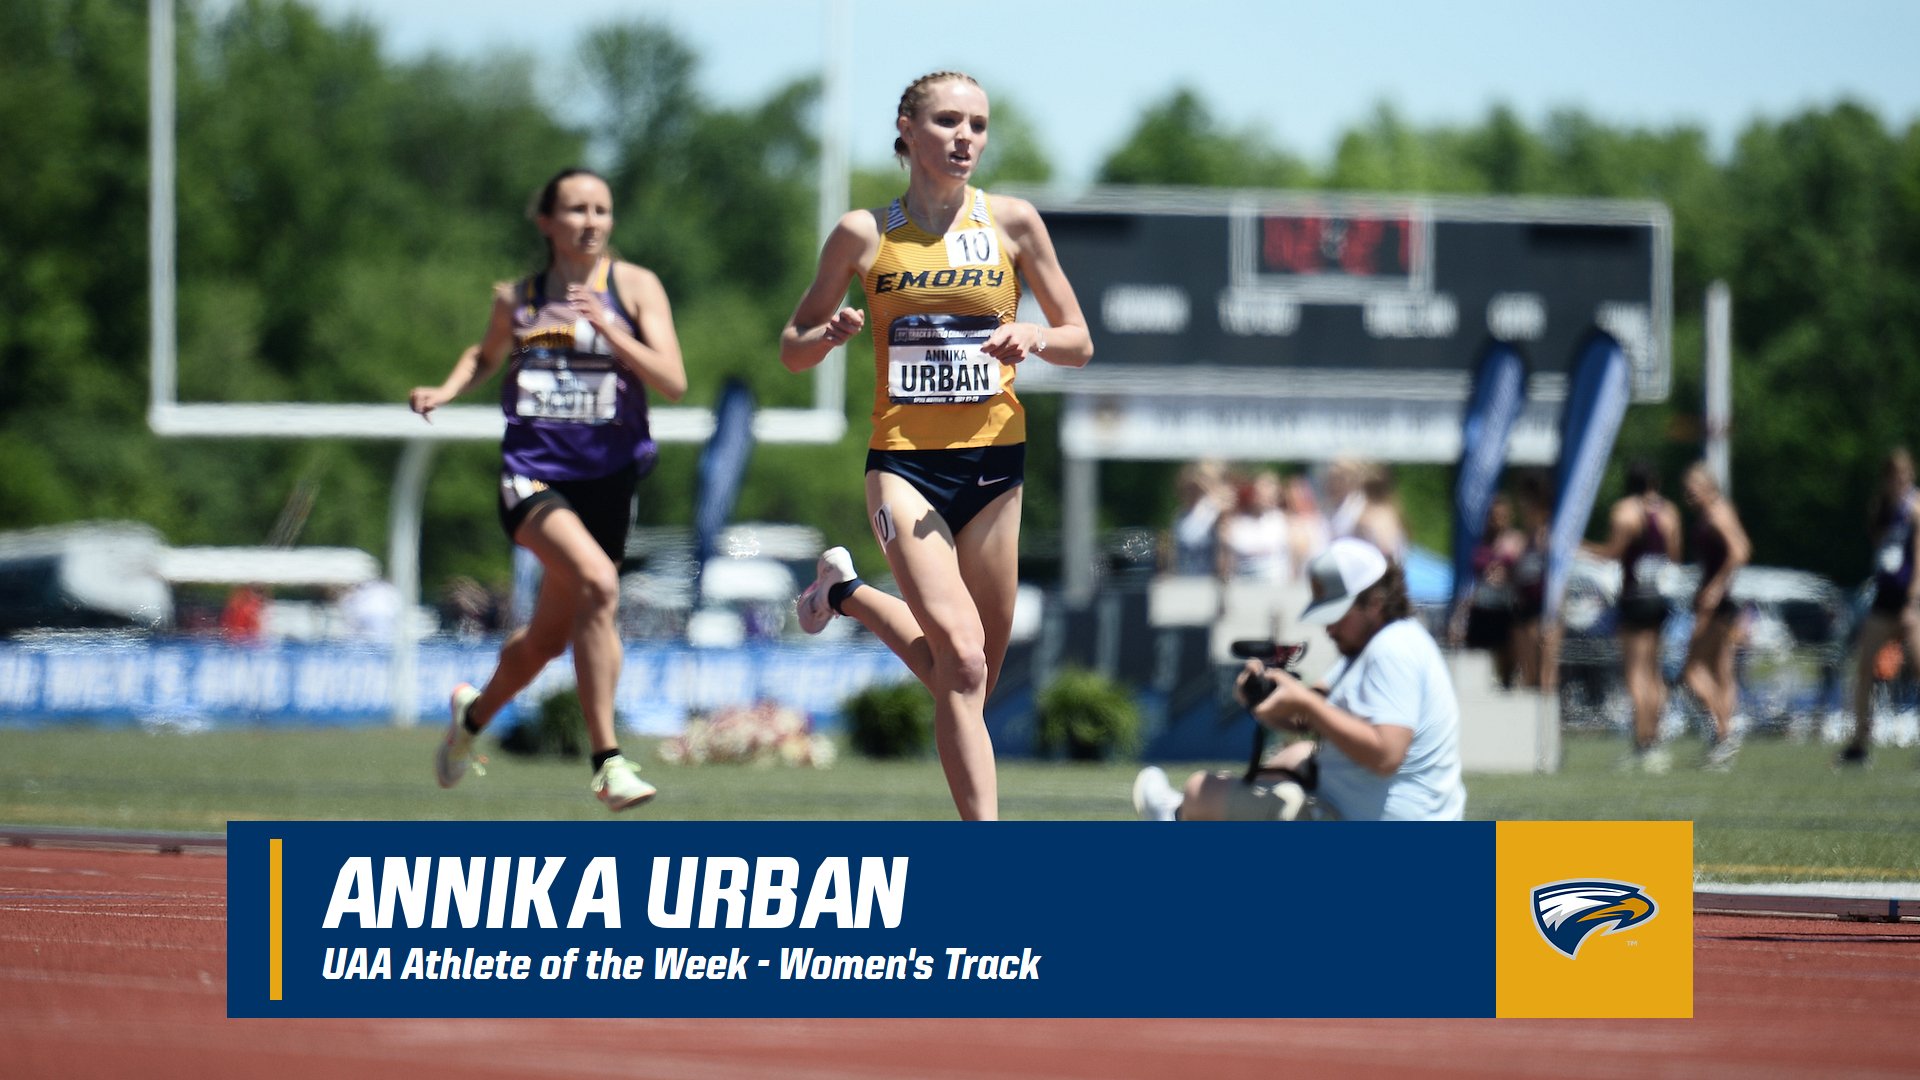 Annika Urban Tabbed as UAA Athlete of the Week